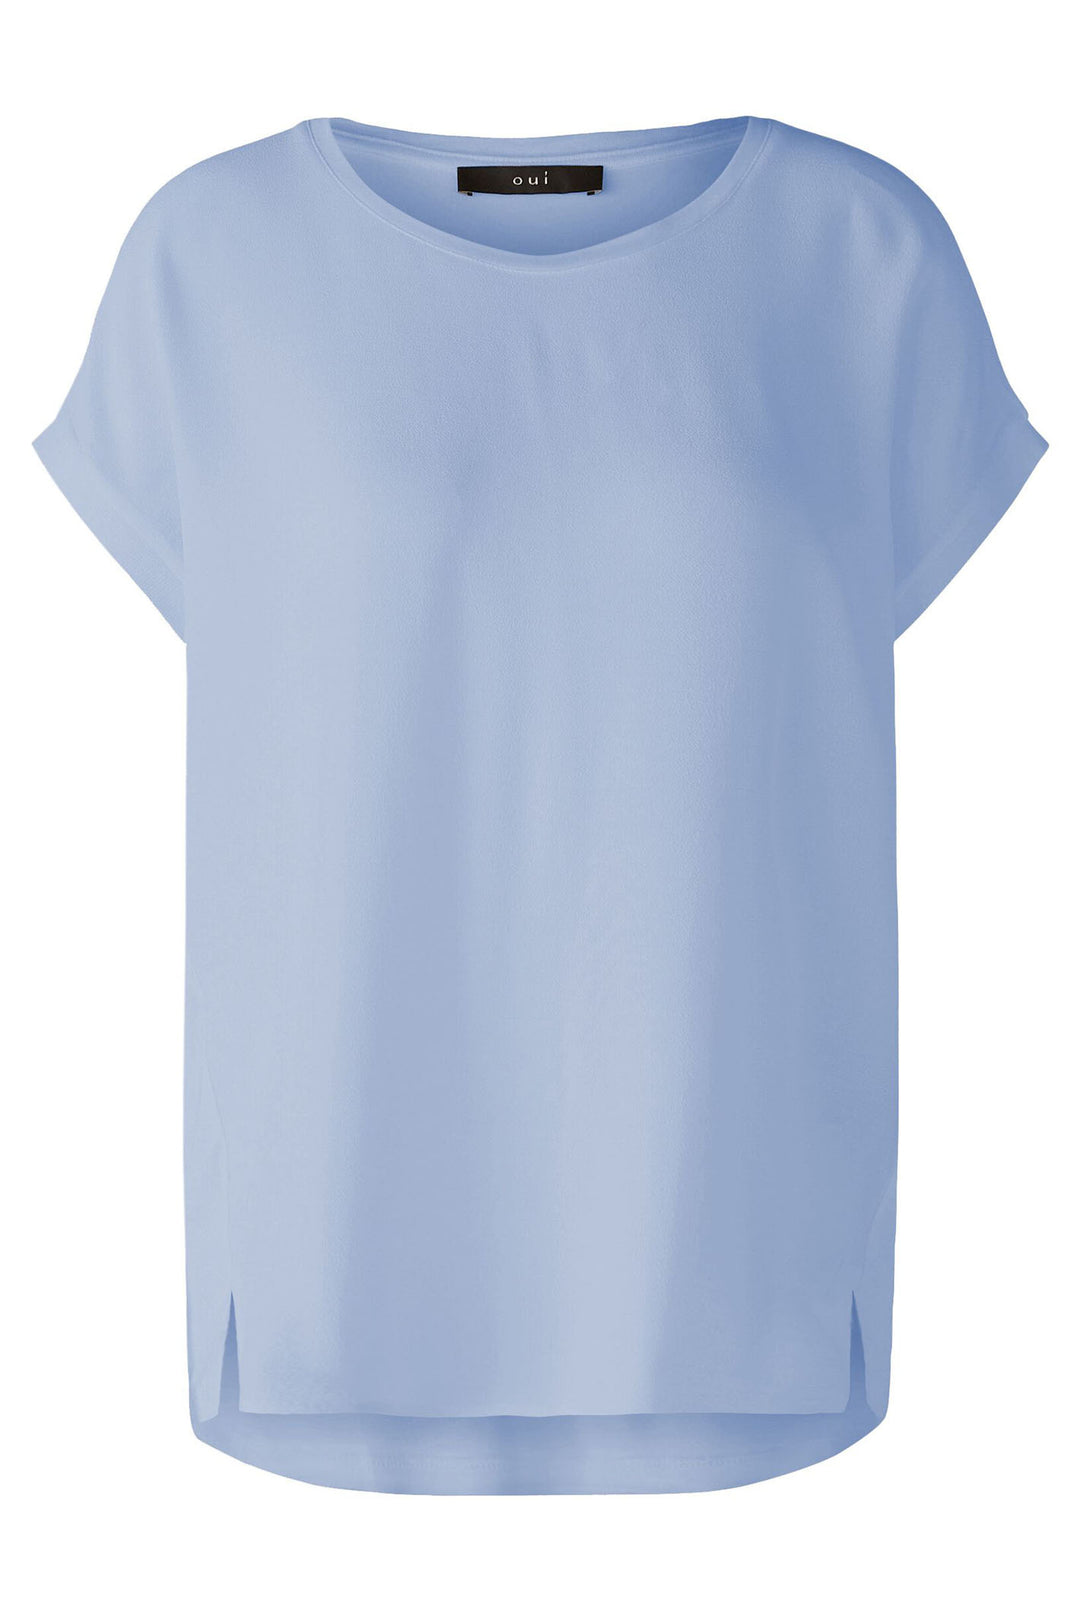 Oui 88335 Ayano Light Blue Short Sleeve Wide Neck Top - Olivia Grace Fashion